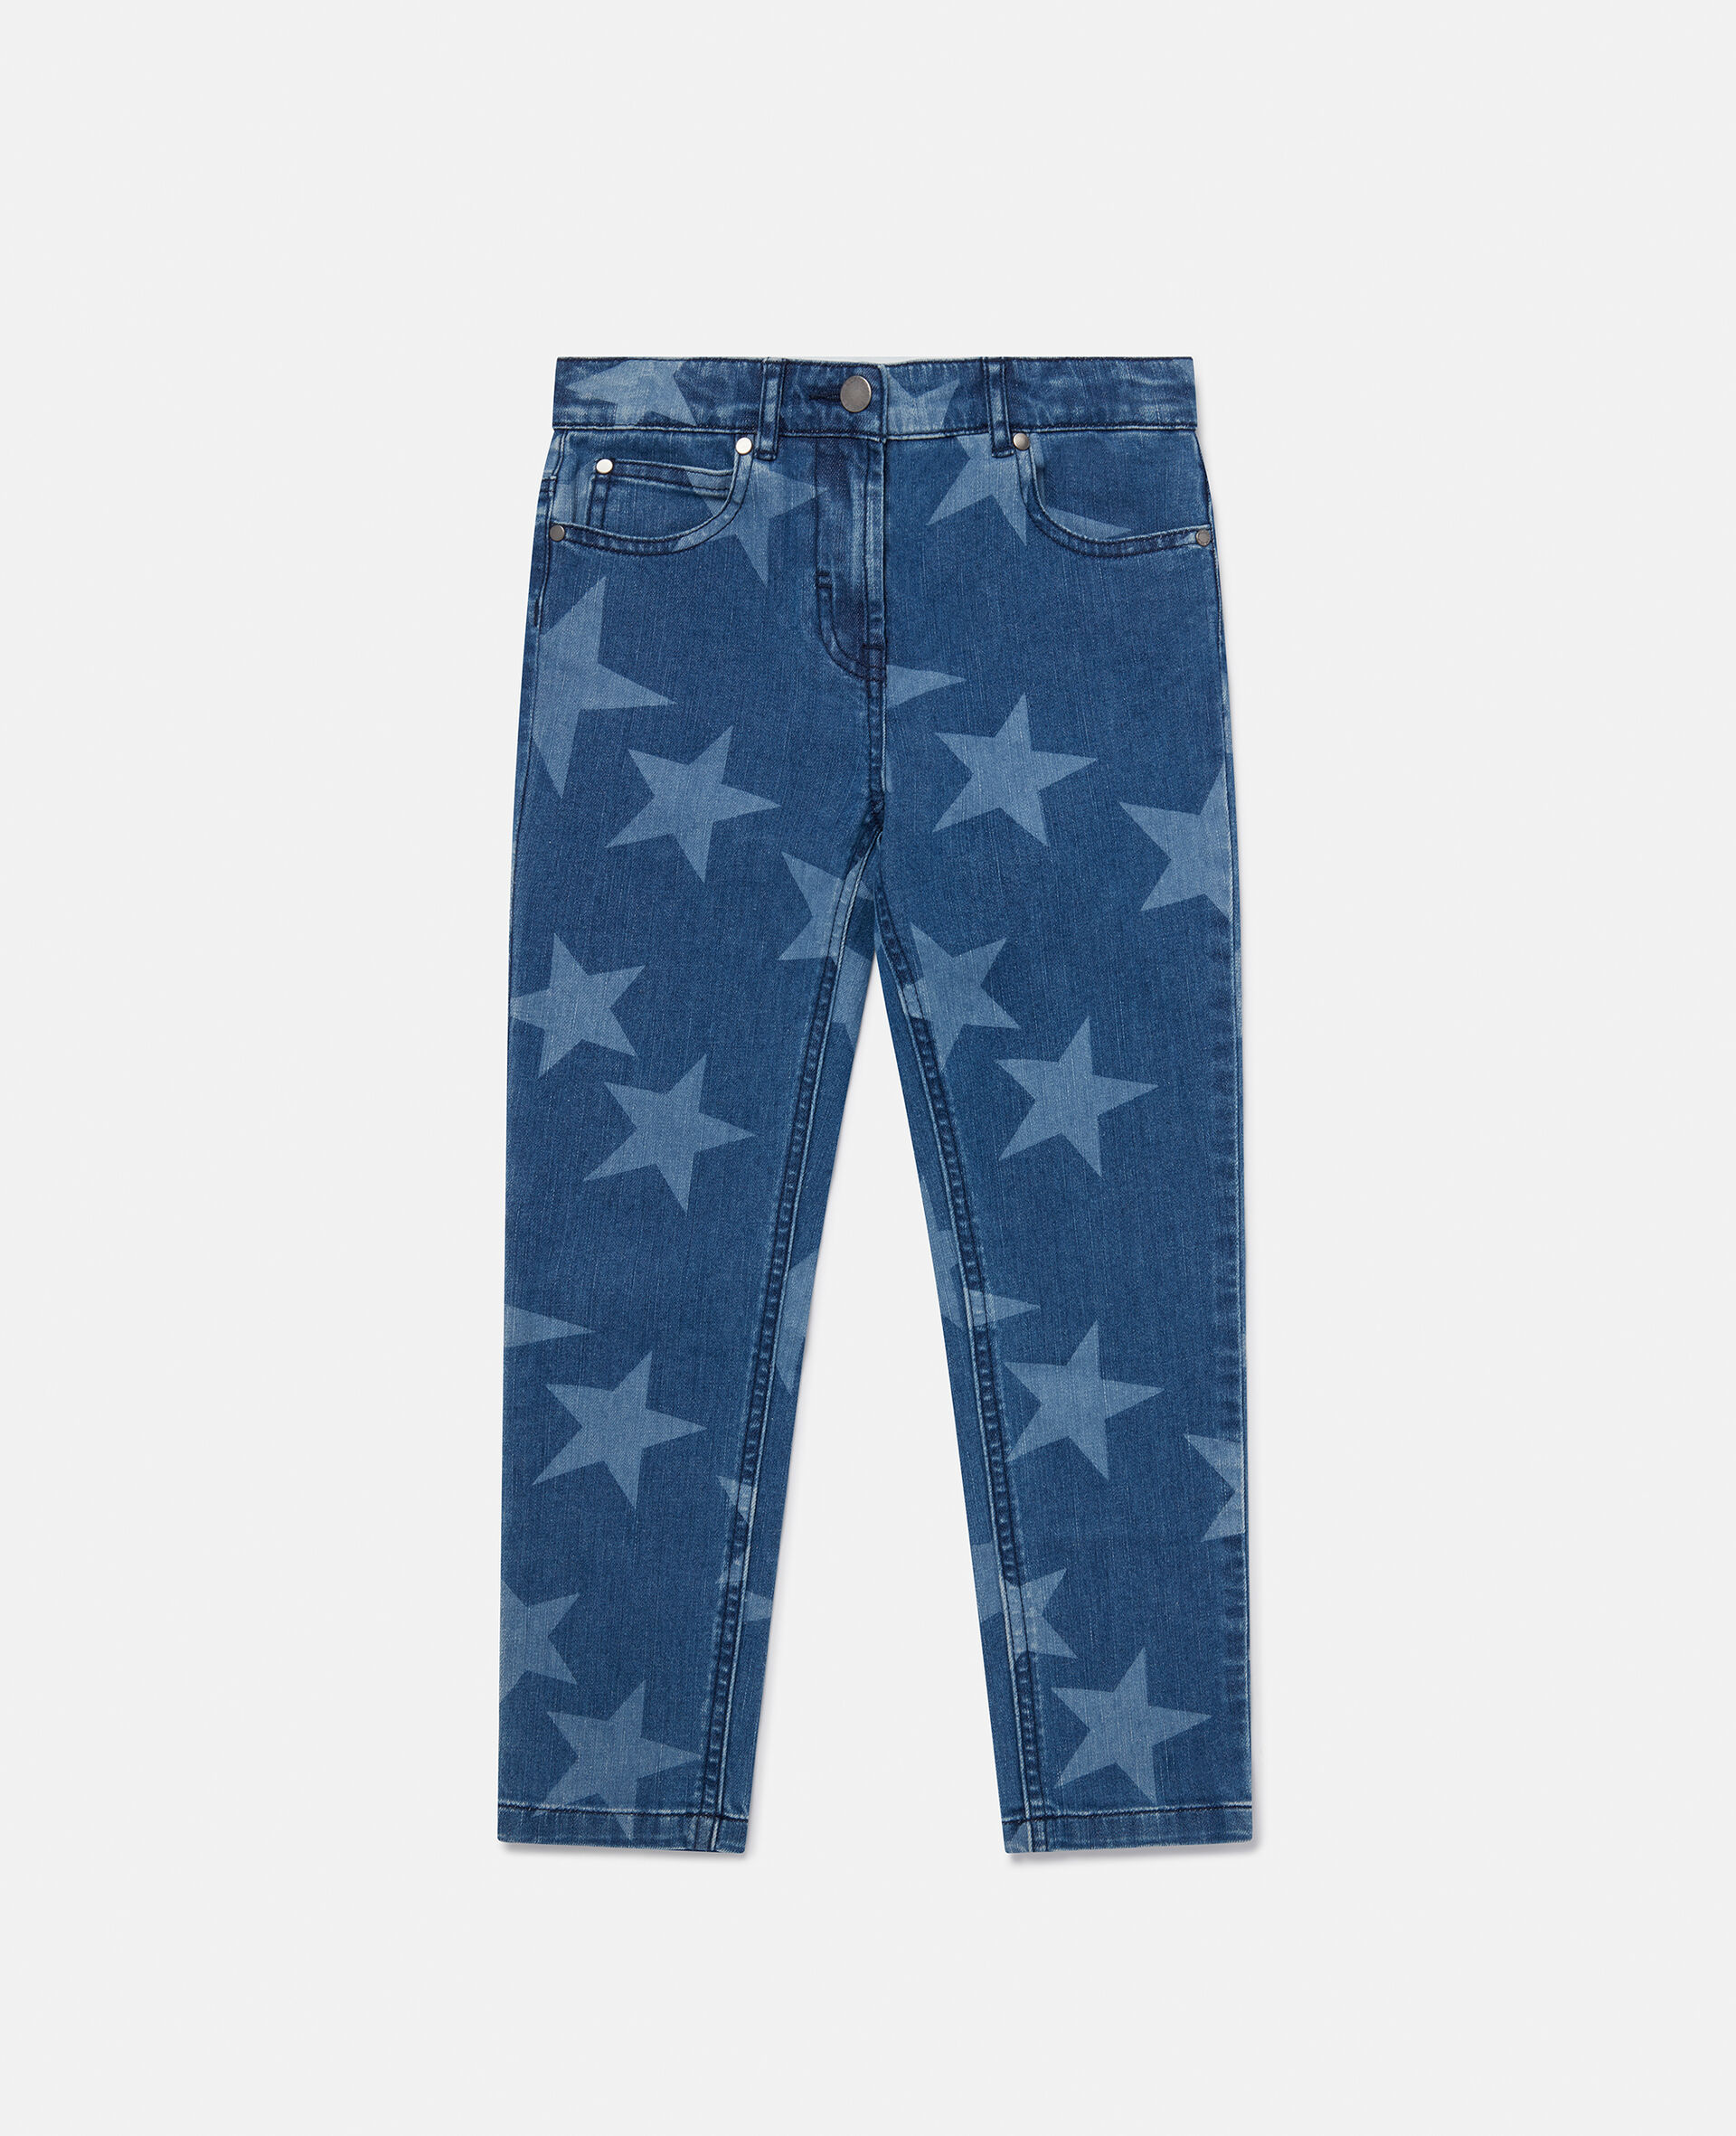 Star Print Skinny Jeans-Blue-large image number 0